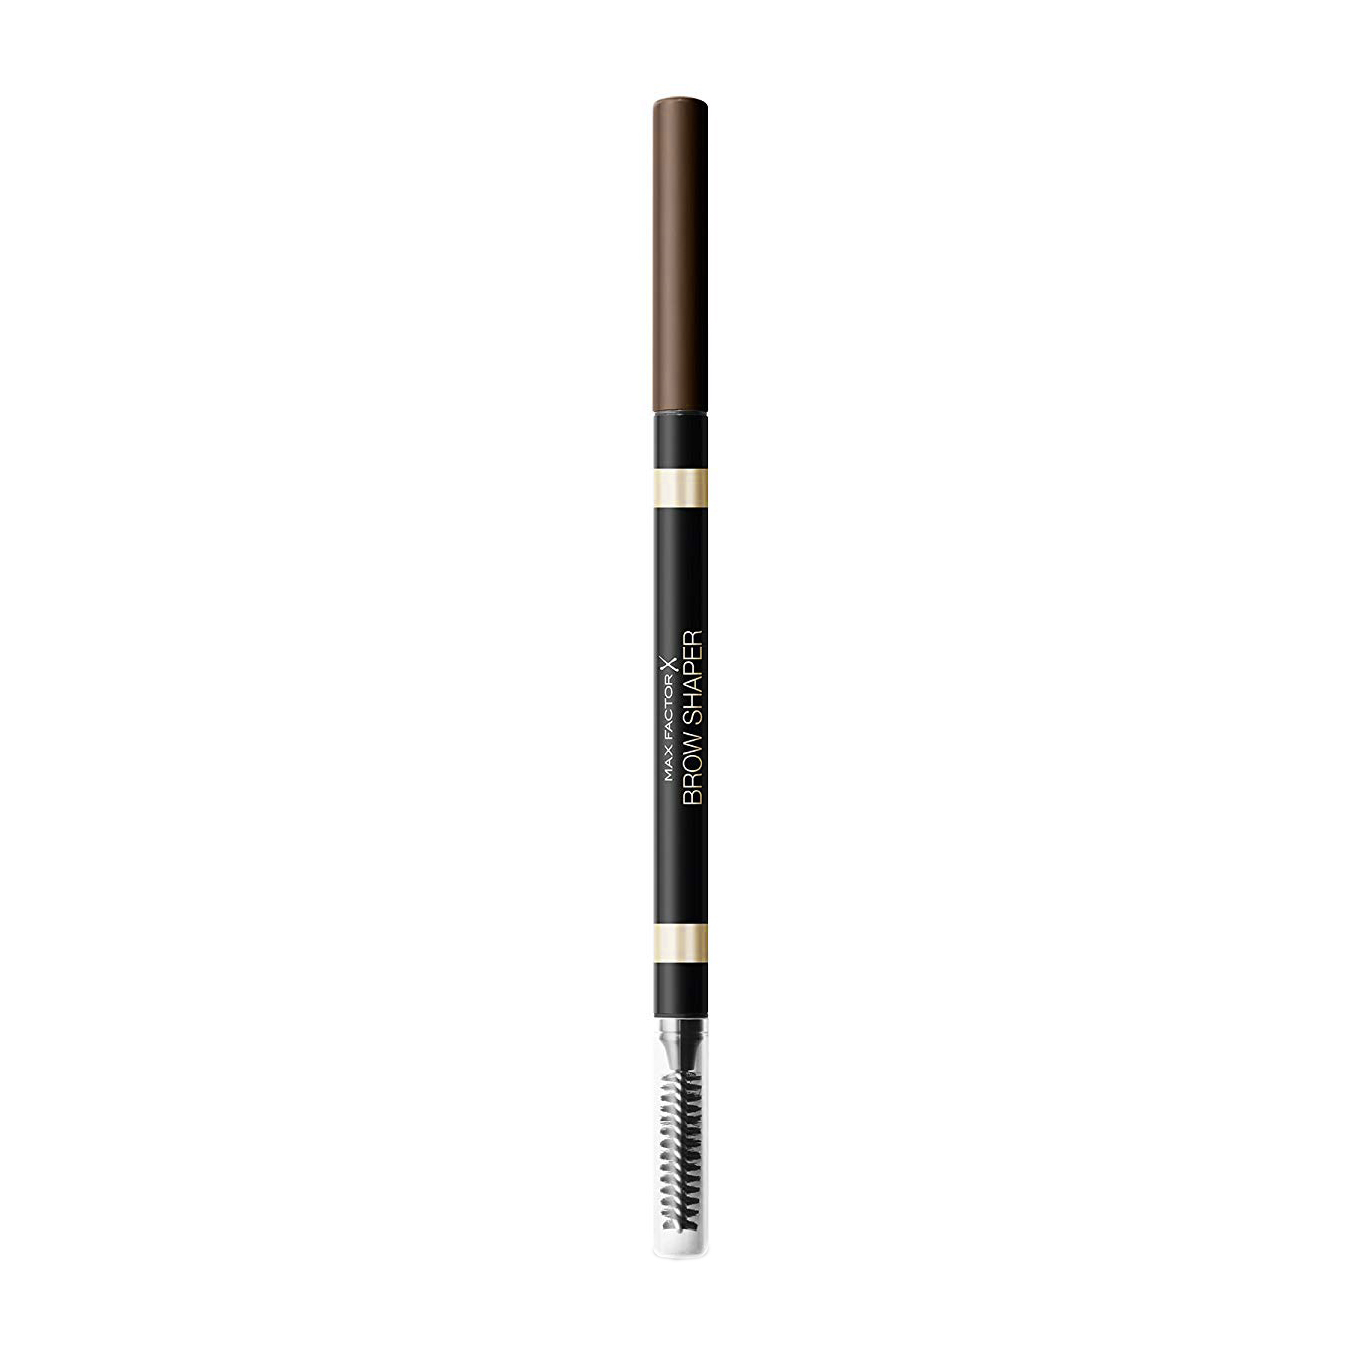 Brow Shaper Eyebrow Pencil - N 30 - Deep Brown